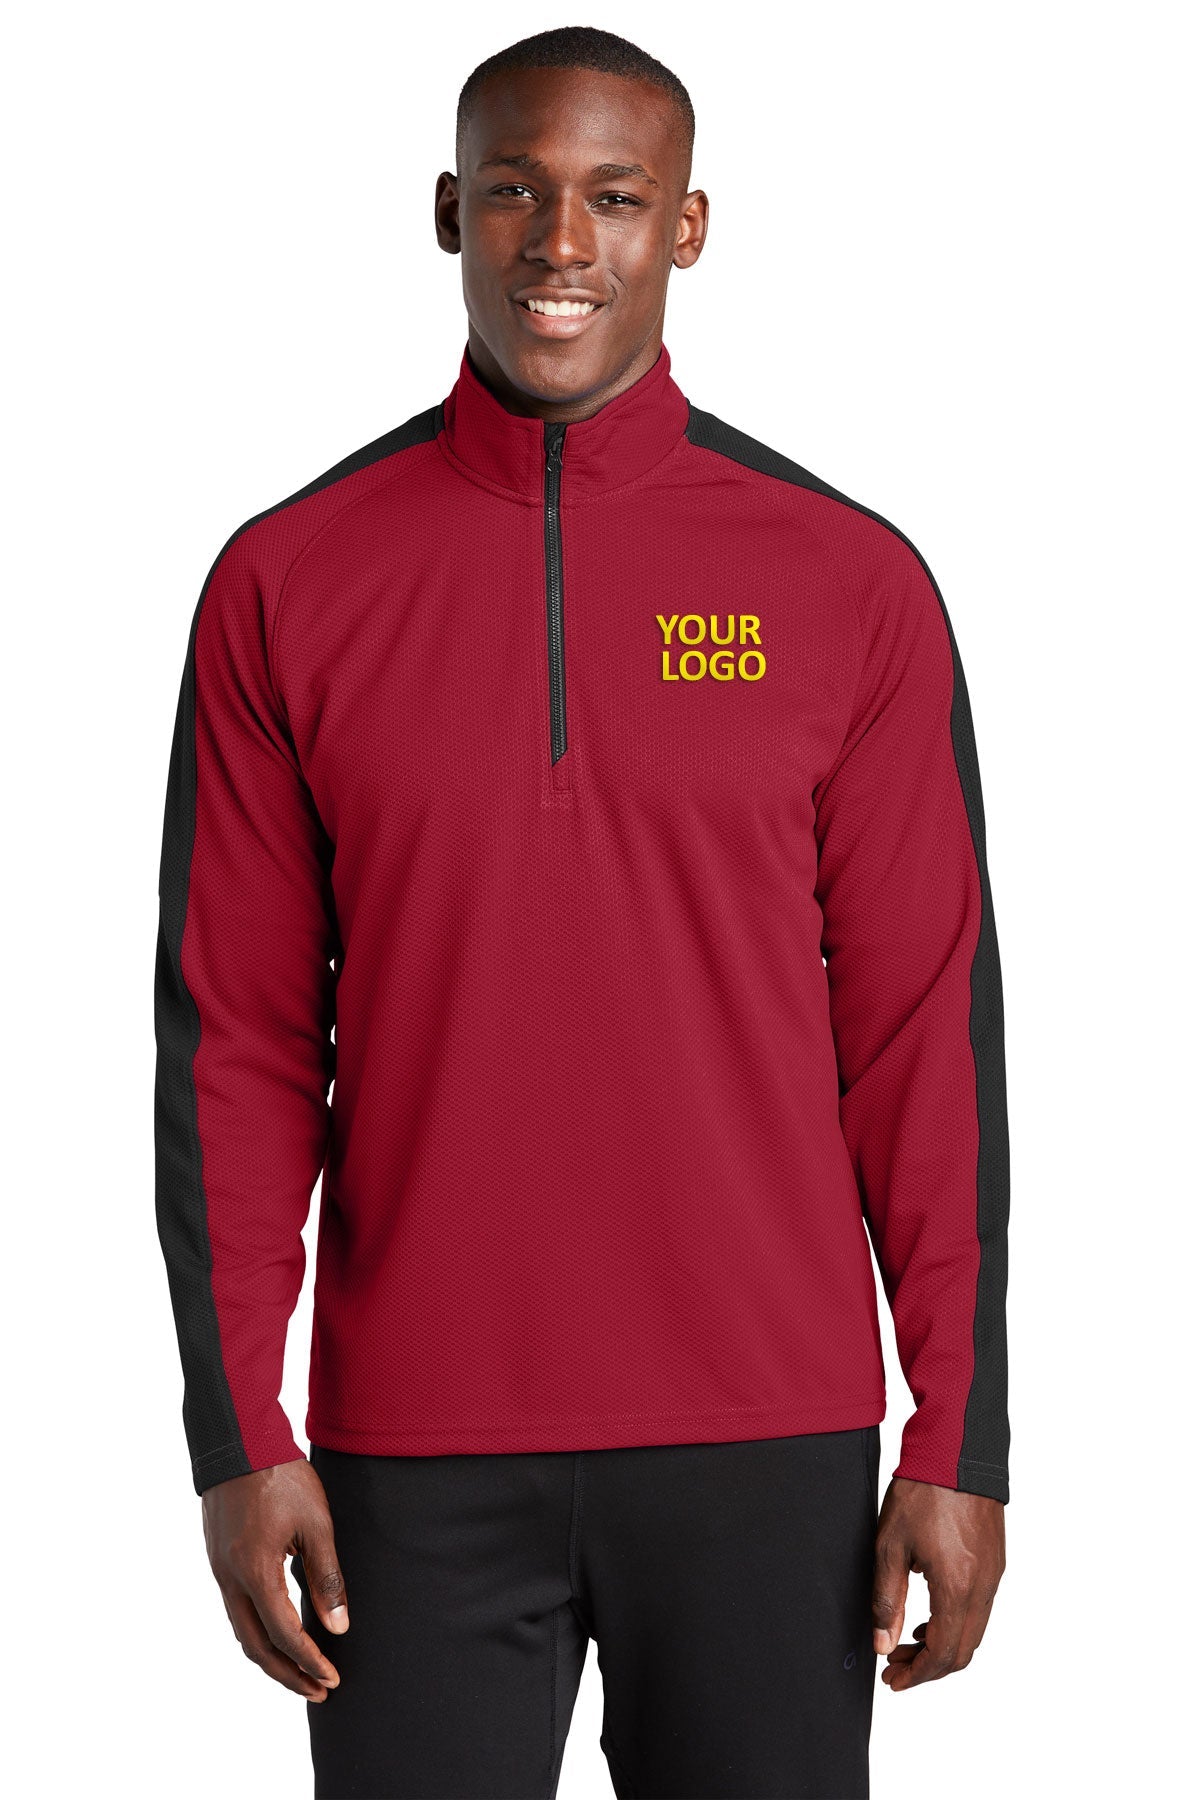 Sport-Tek Deep Red/ Black ST861 sweatshirts with logo printed